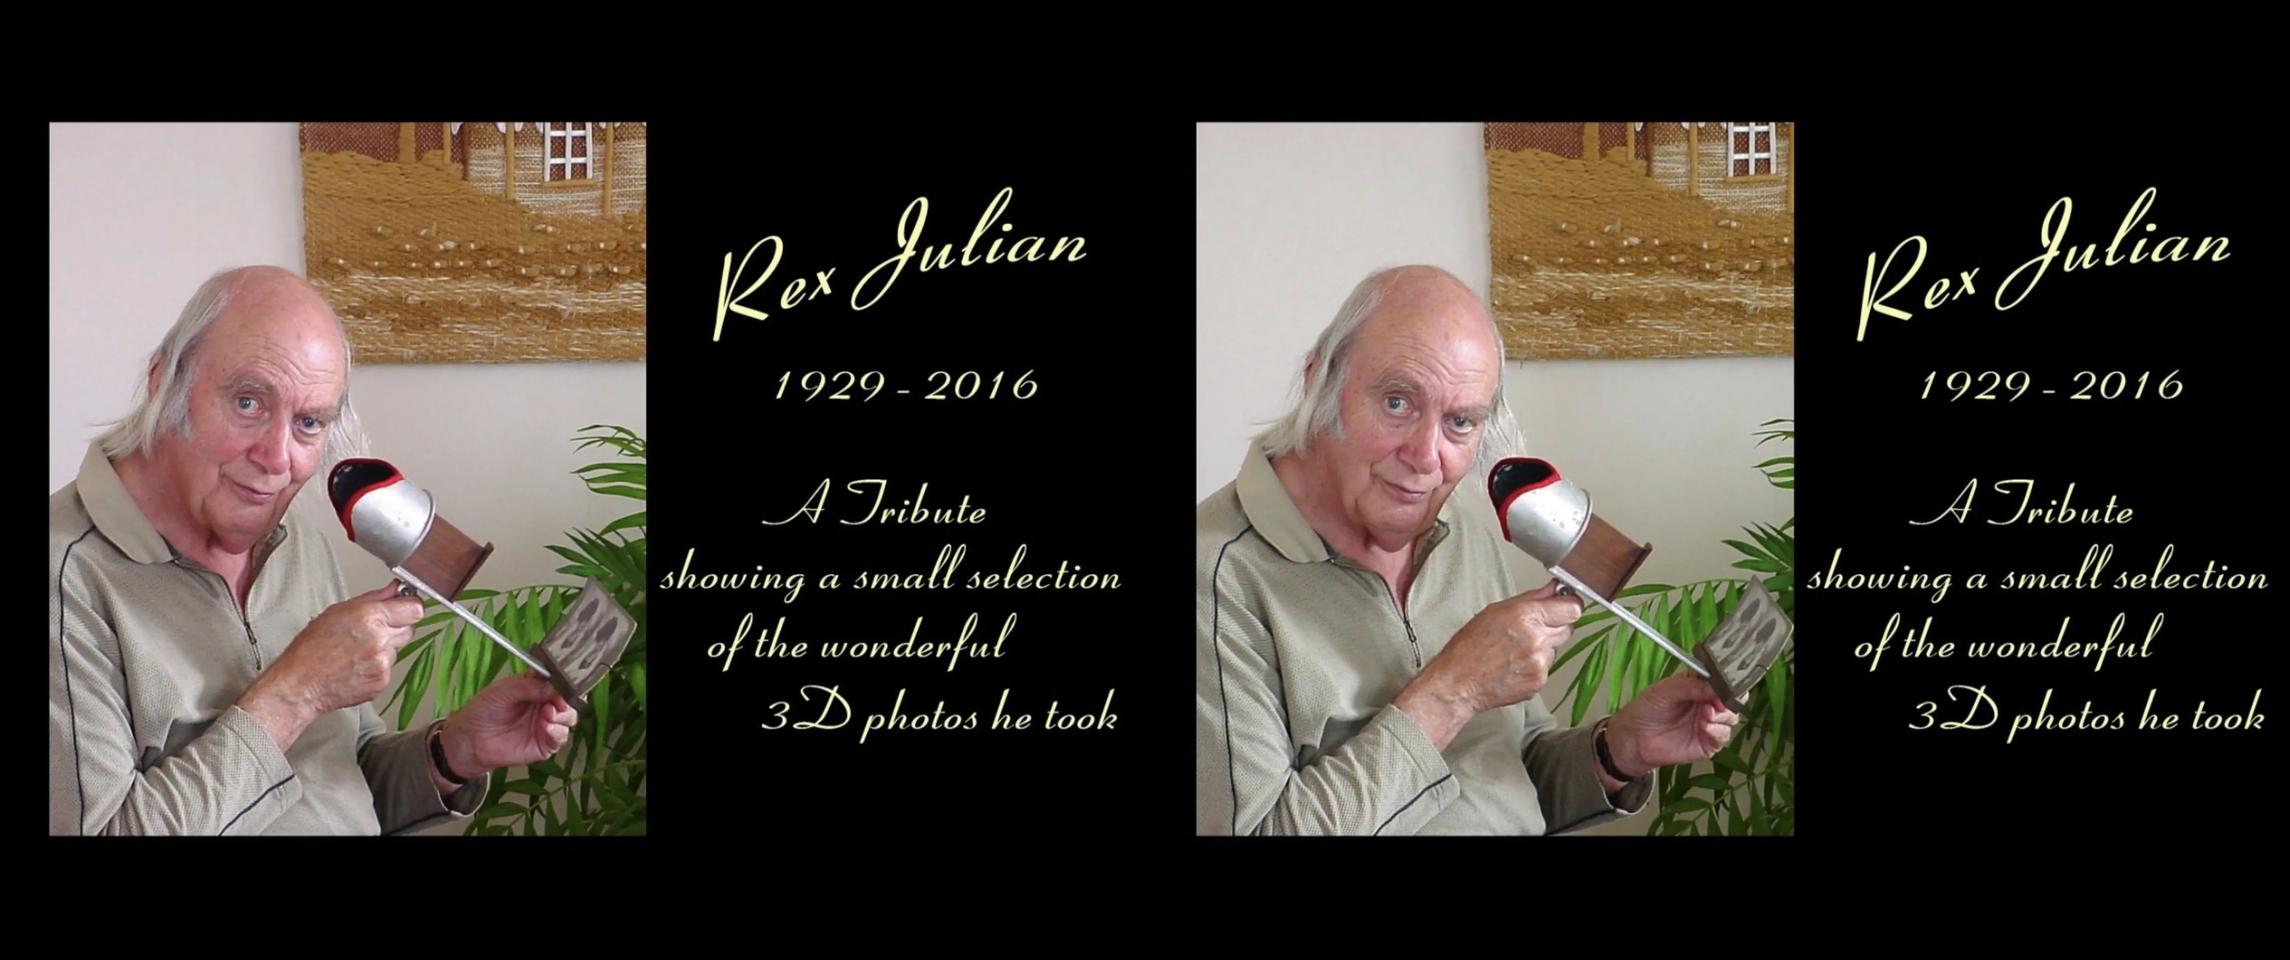 Rex Jullian 1929-2016